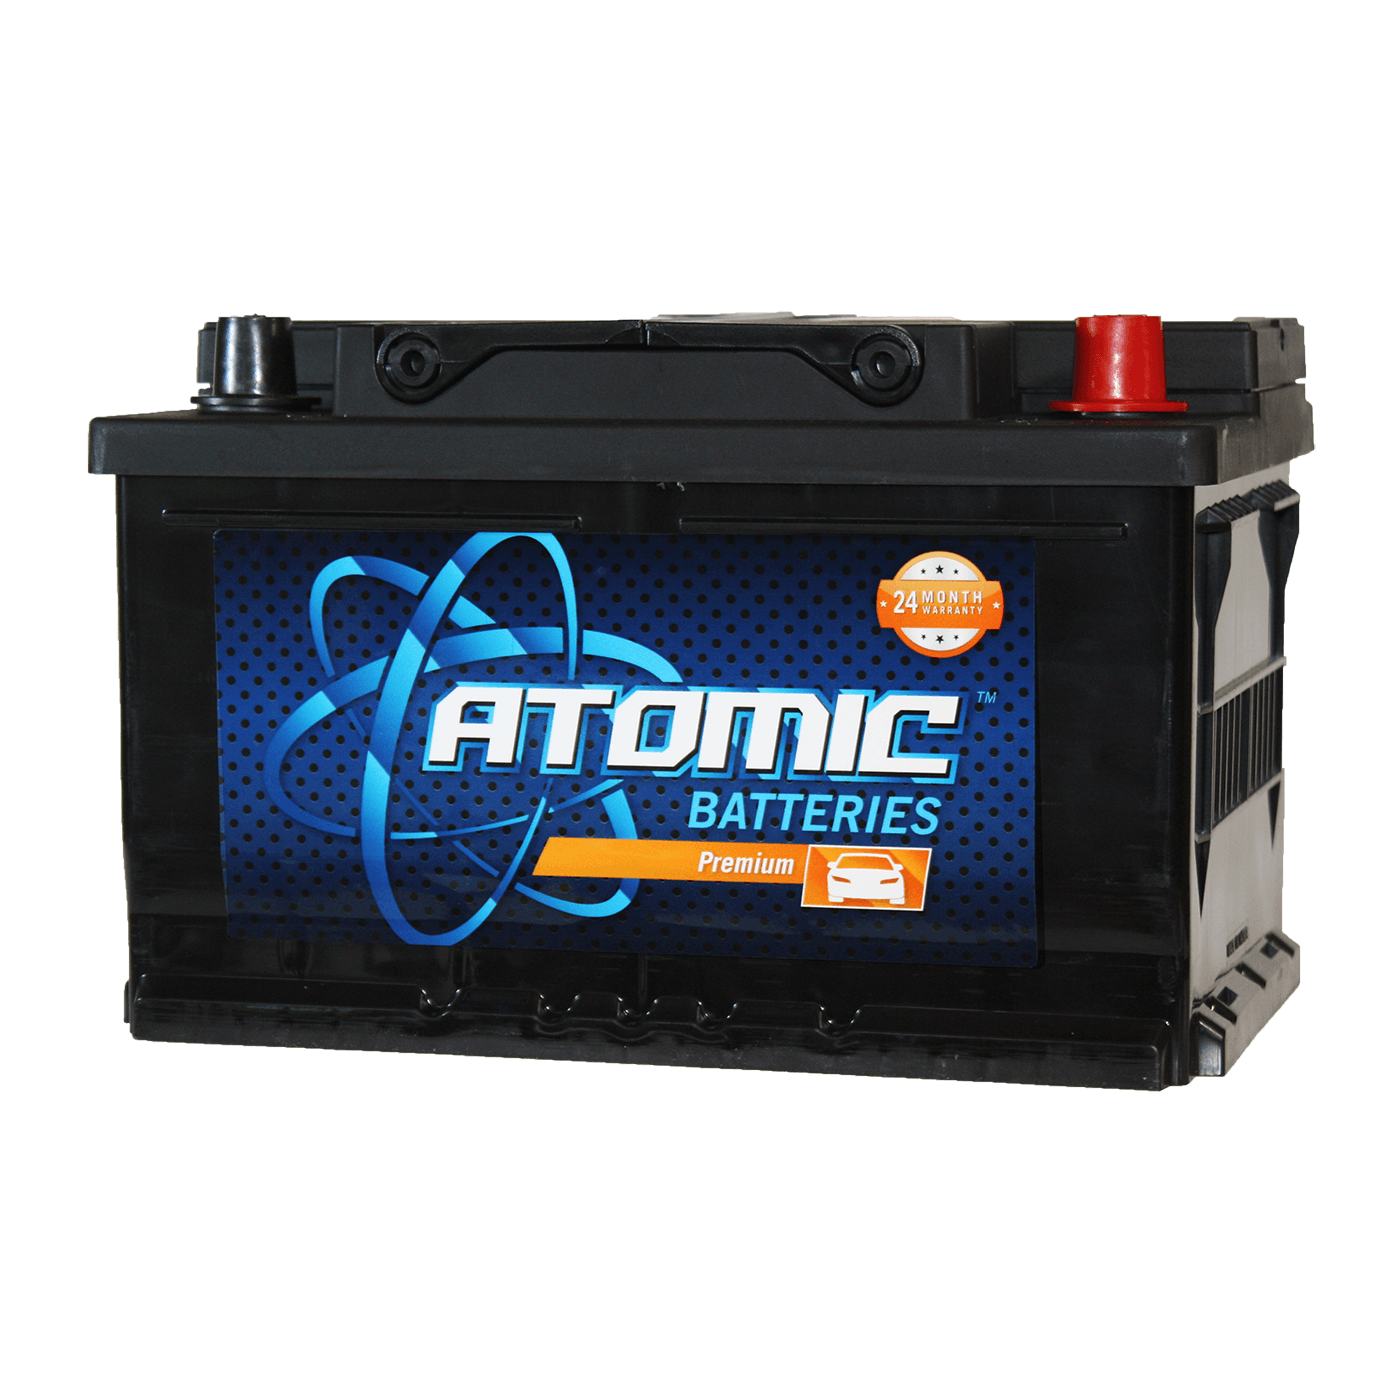 Cars – Atomic Batteries